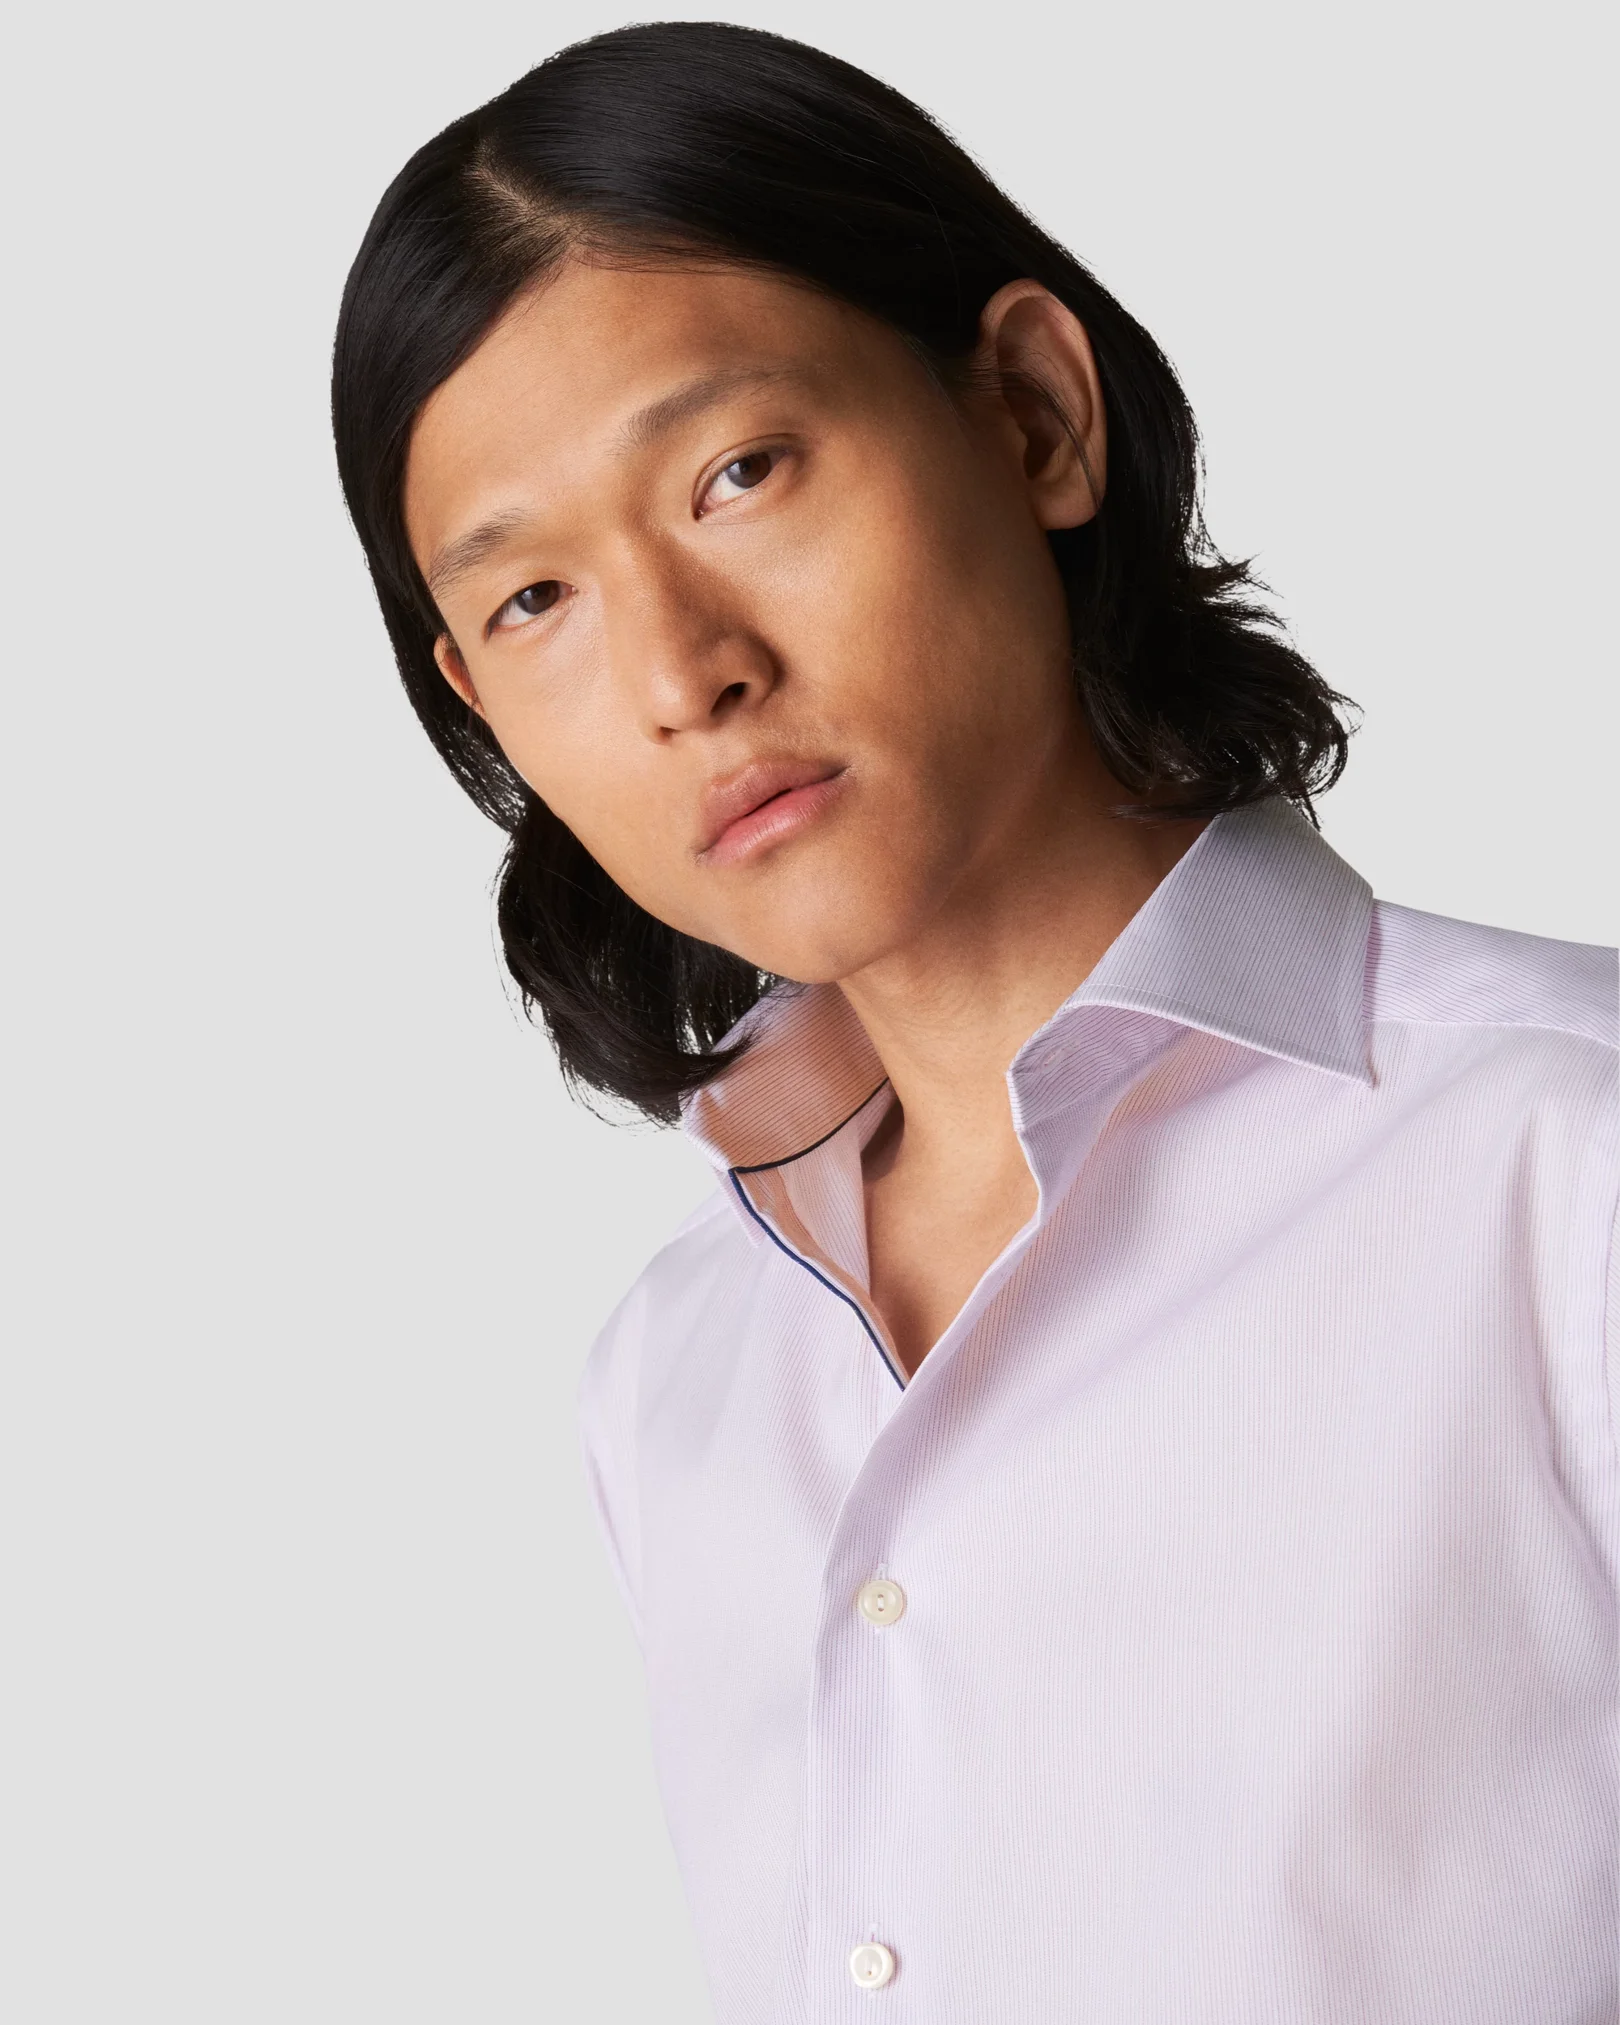 Eton - pink twill hairline shirt